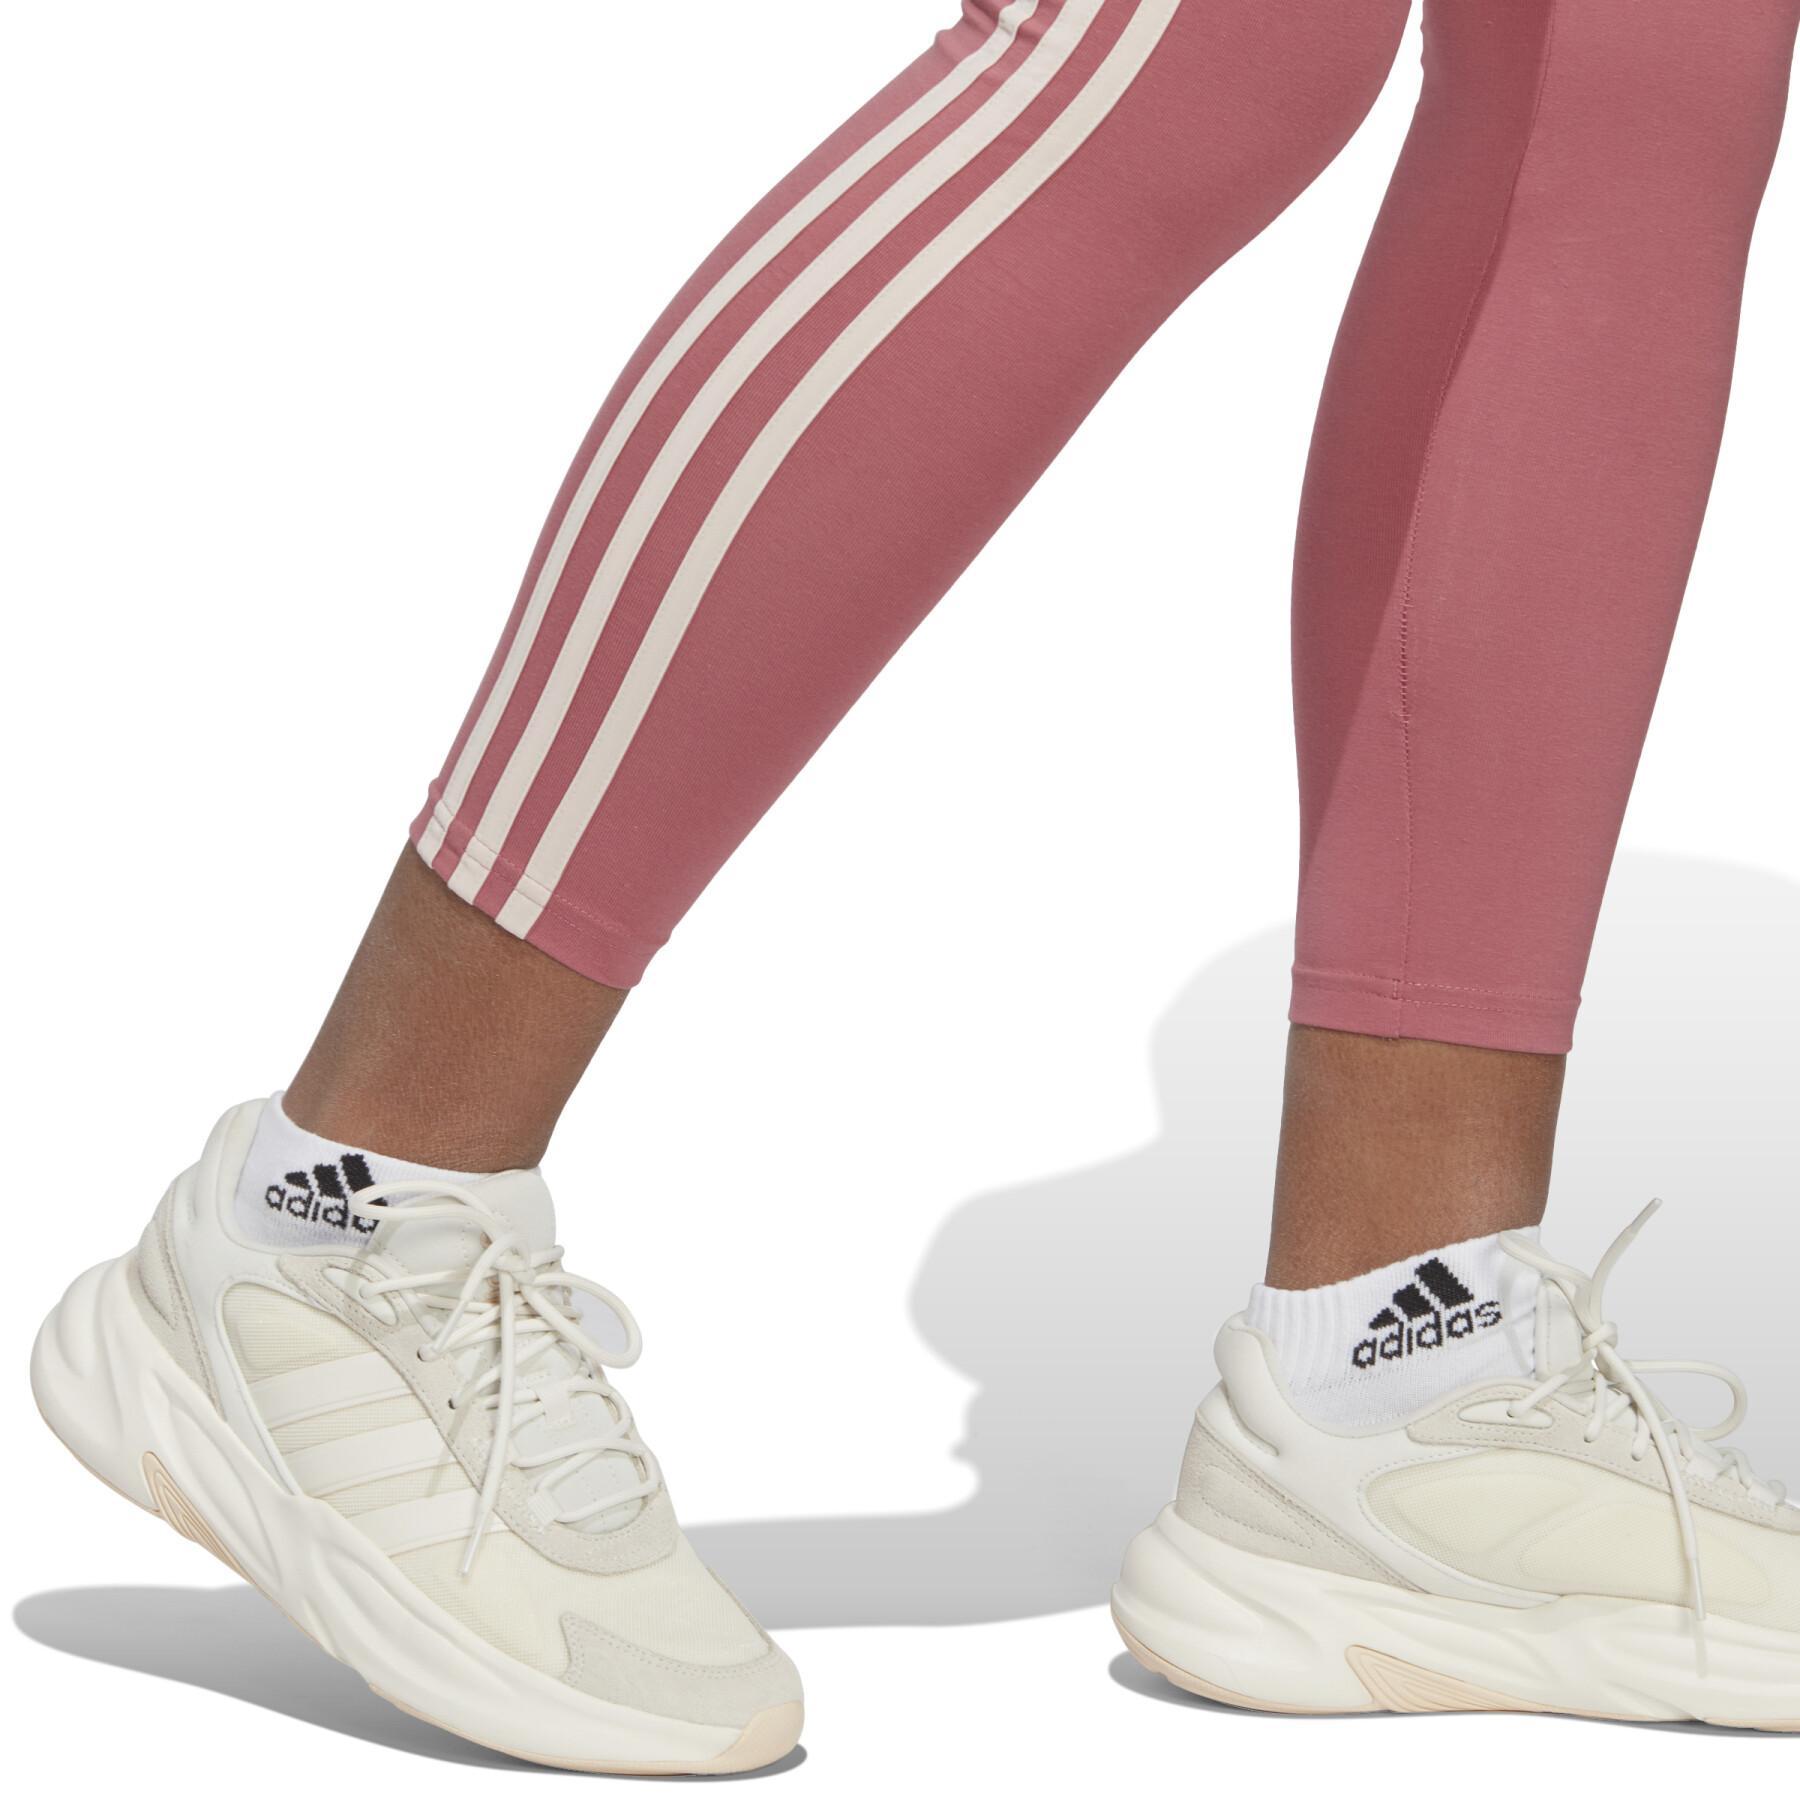 Legging donna a vita alta in jersey semplice adidas Essentials 3-Stripes